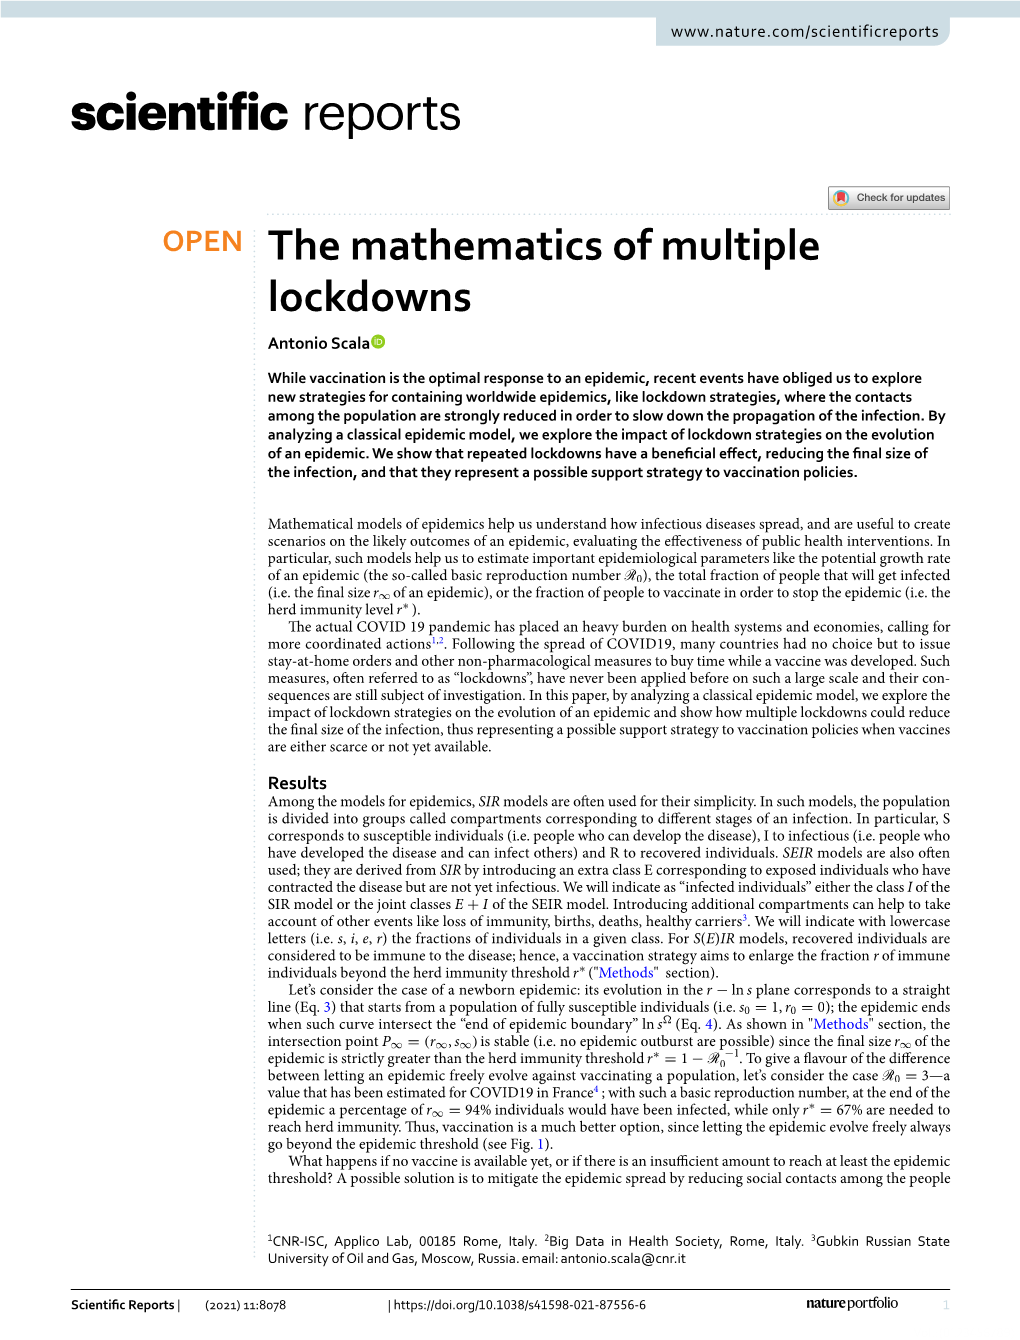 The Mathematics of Multiple Lockdowns Antonio Scala